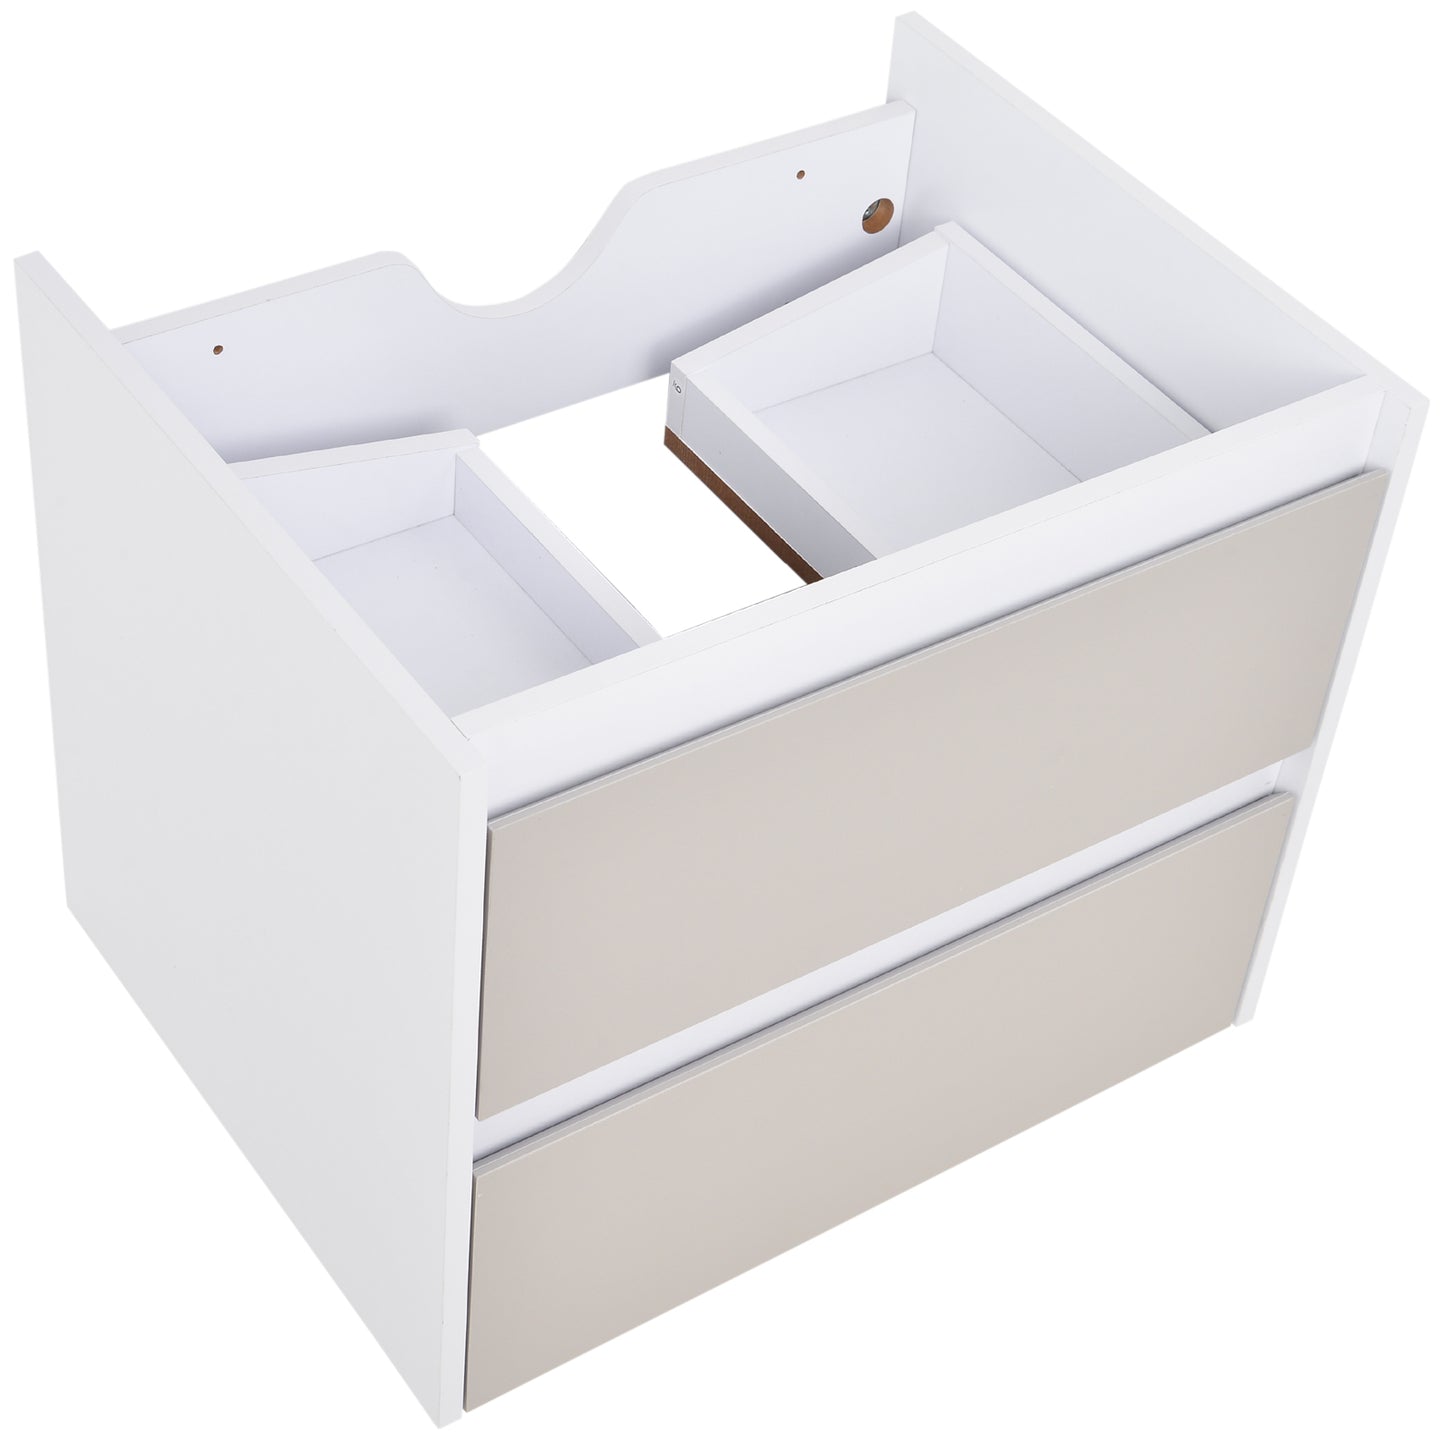 kleankin 2 Drawer Hanging Bathroom Cabinet Open Top Home Storage Melamine Surface White